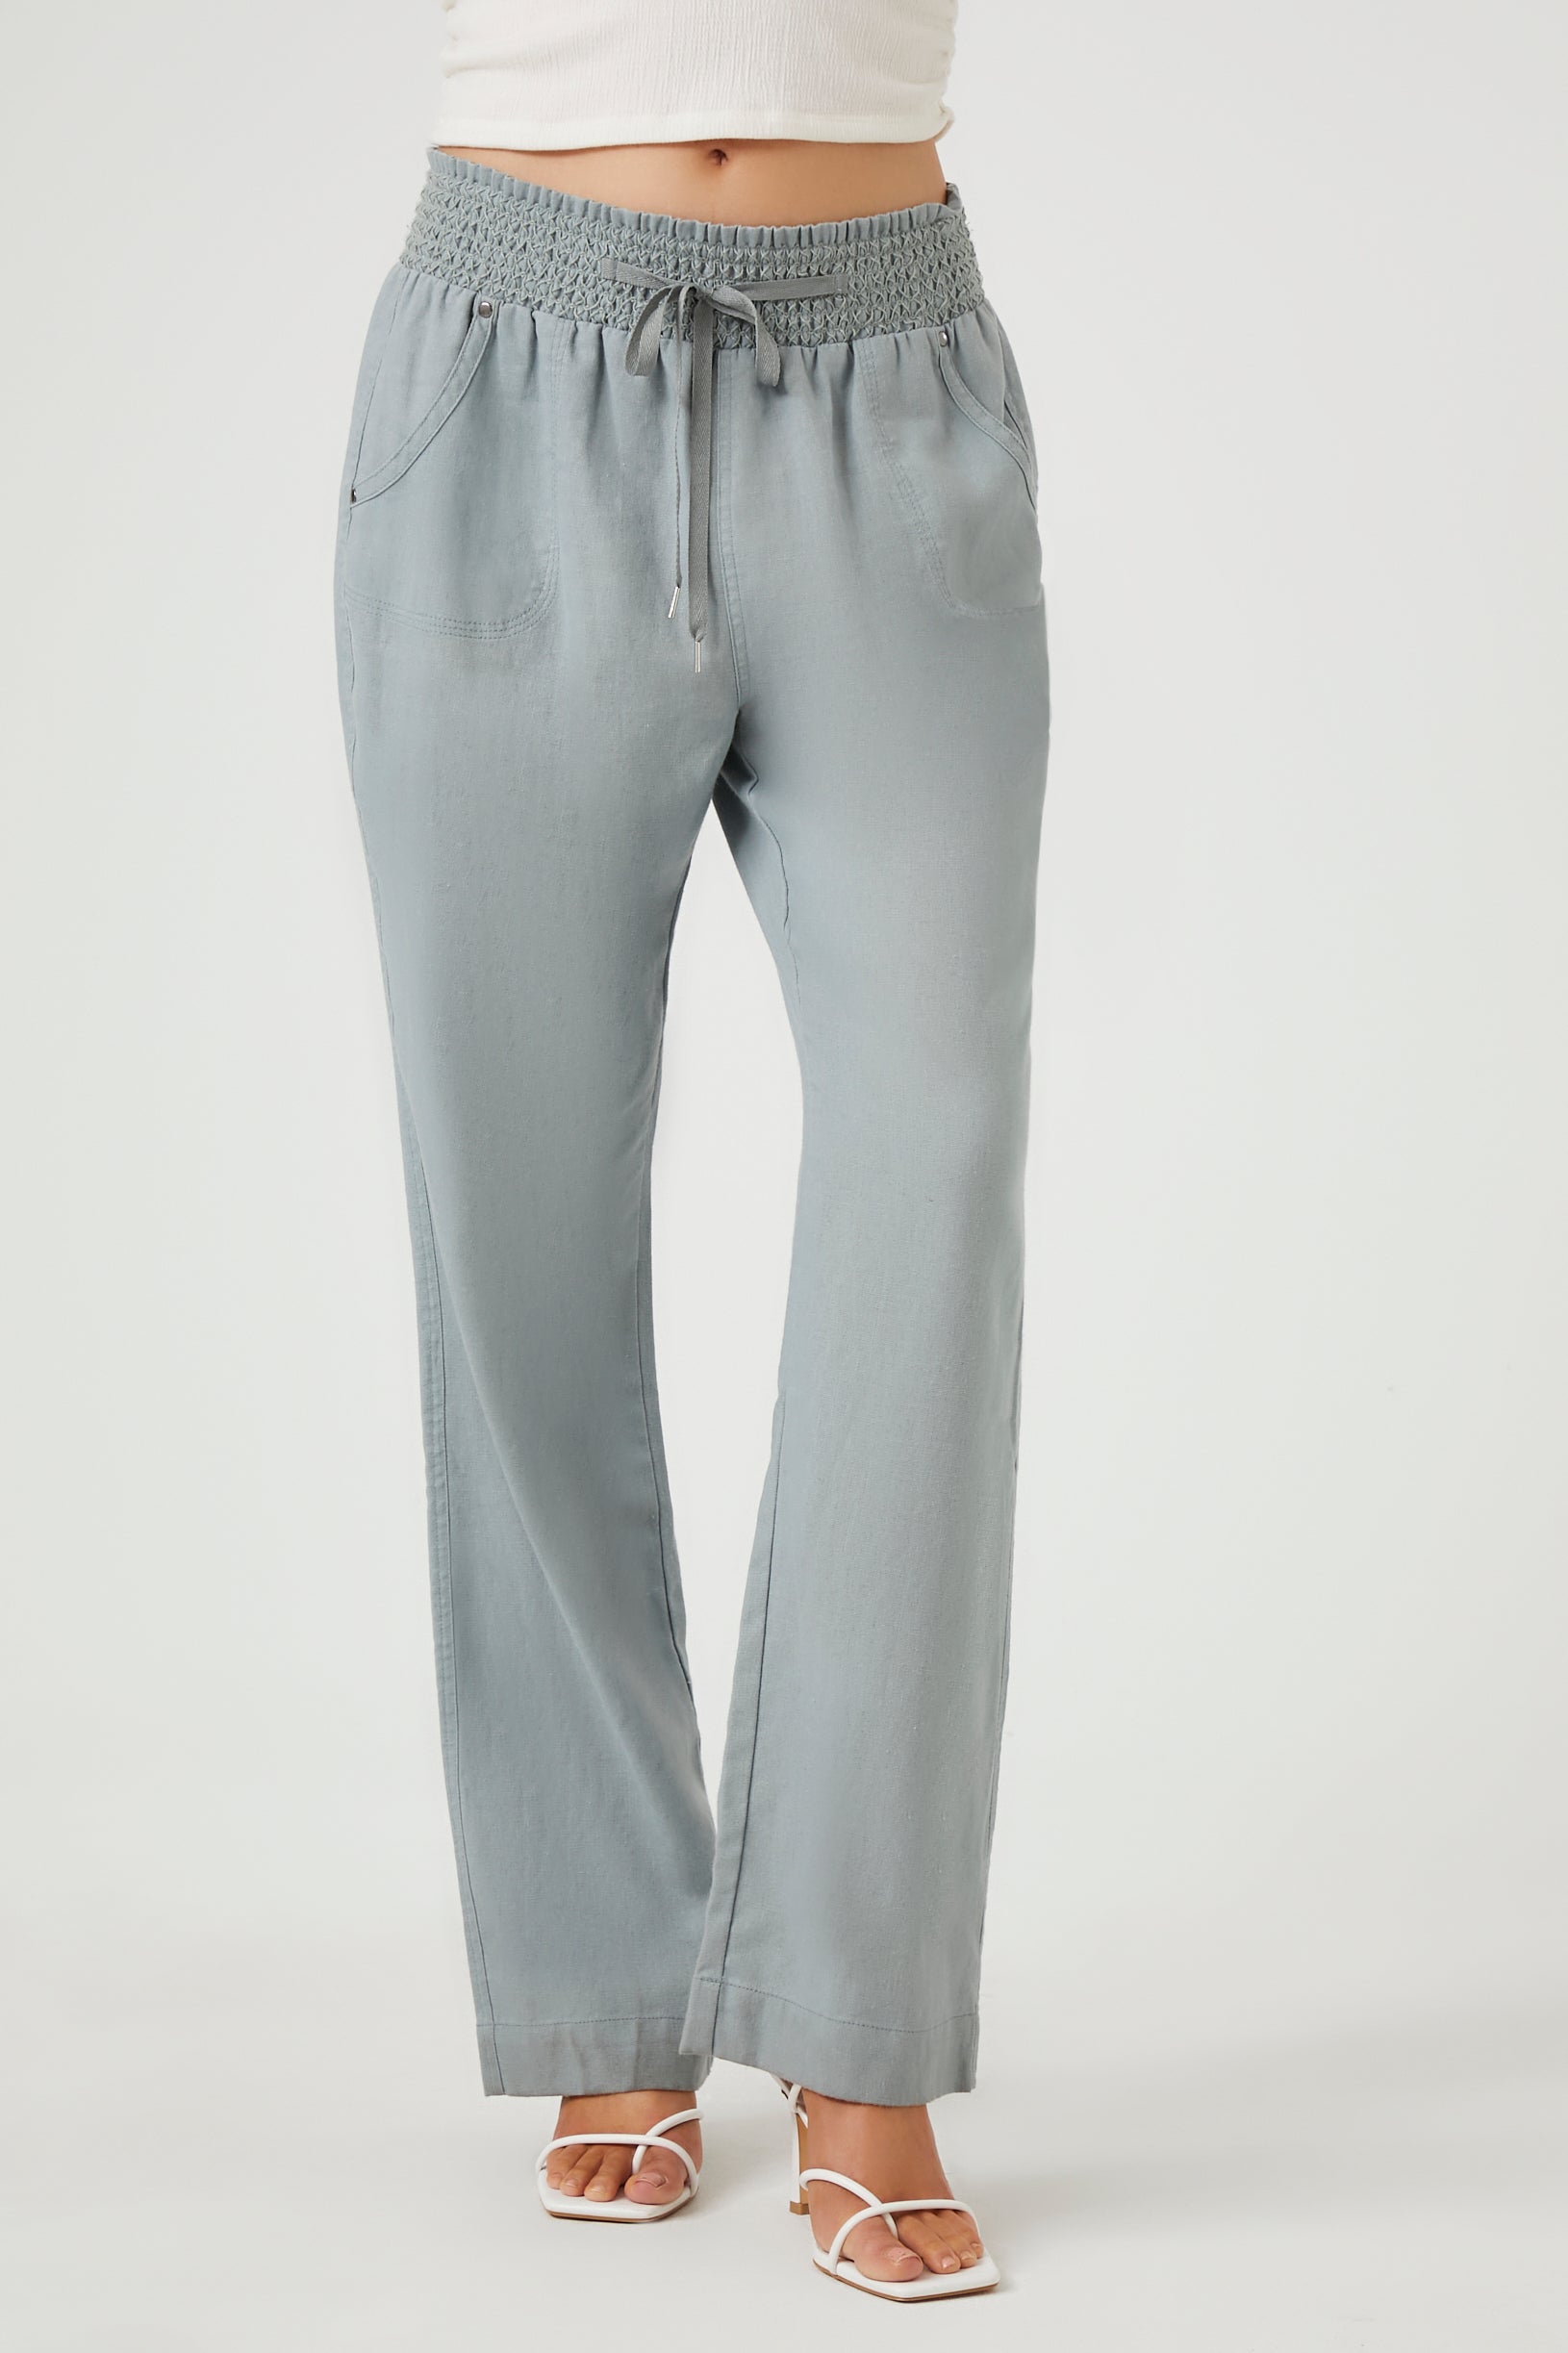 Flowing printed trousers - SALE - Woman -  Lefties UAE -  Dubai/Sharjah/Ajman/UAQ/Fujairah